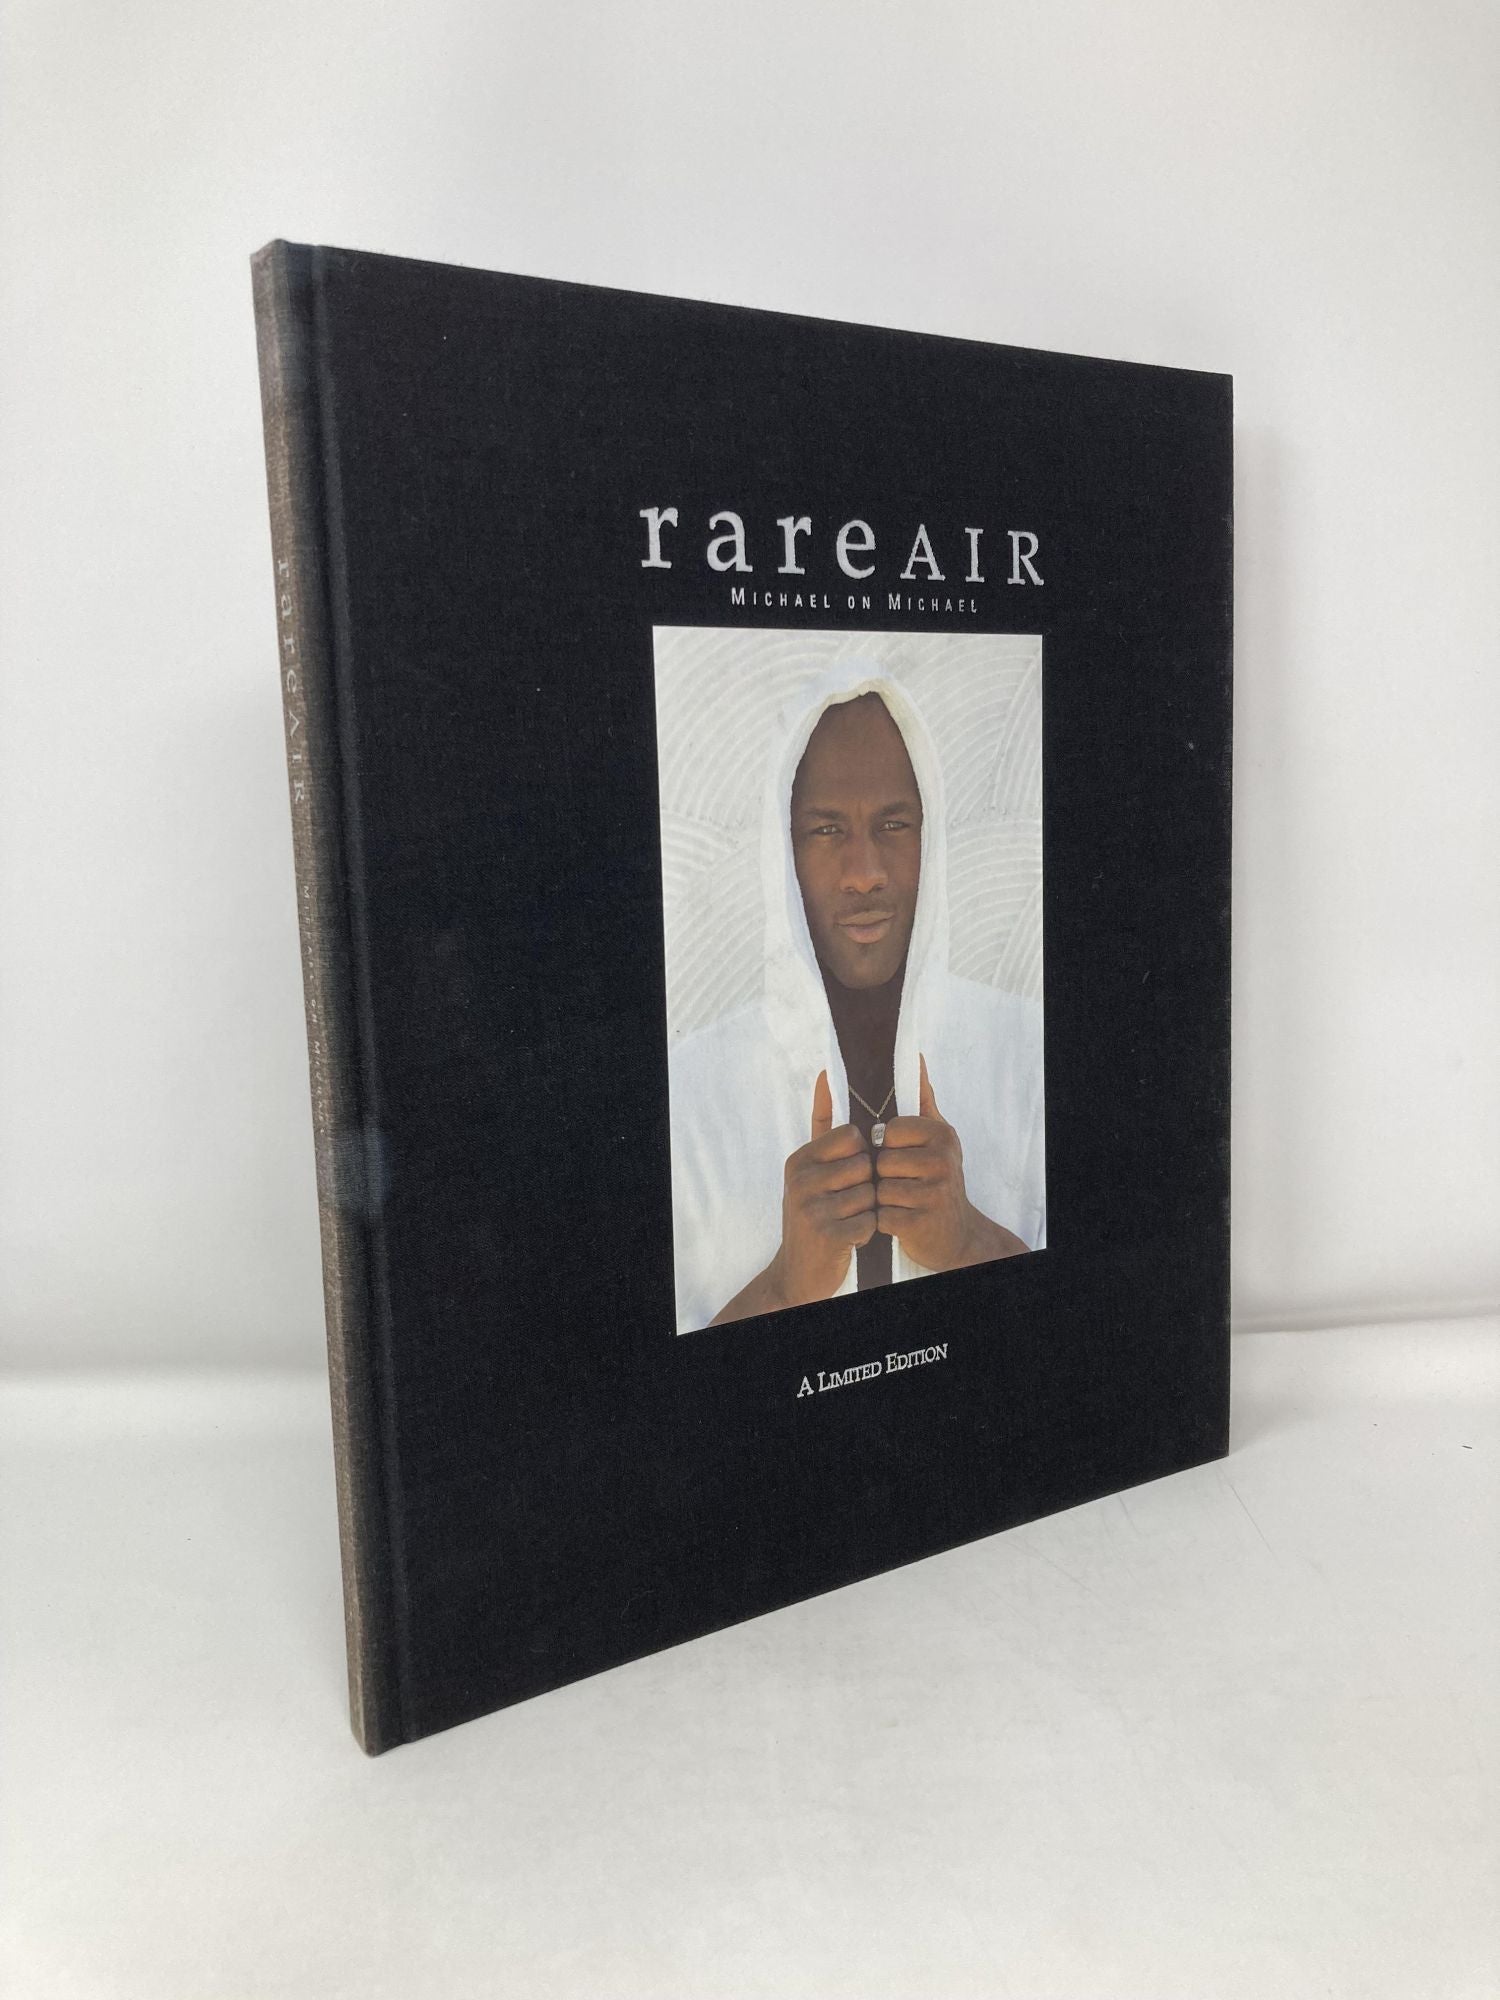 Rare Air: Michael on Michael by Michael Jordan, Mark, Vancil, Walter, Iooss  on Sag Harbor Books